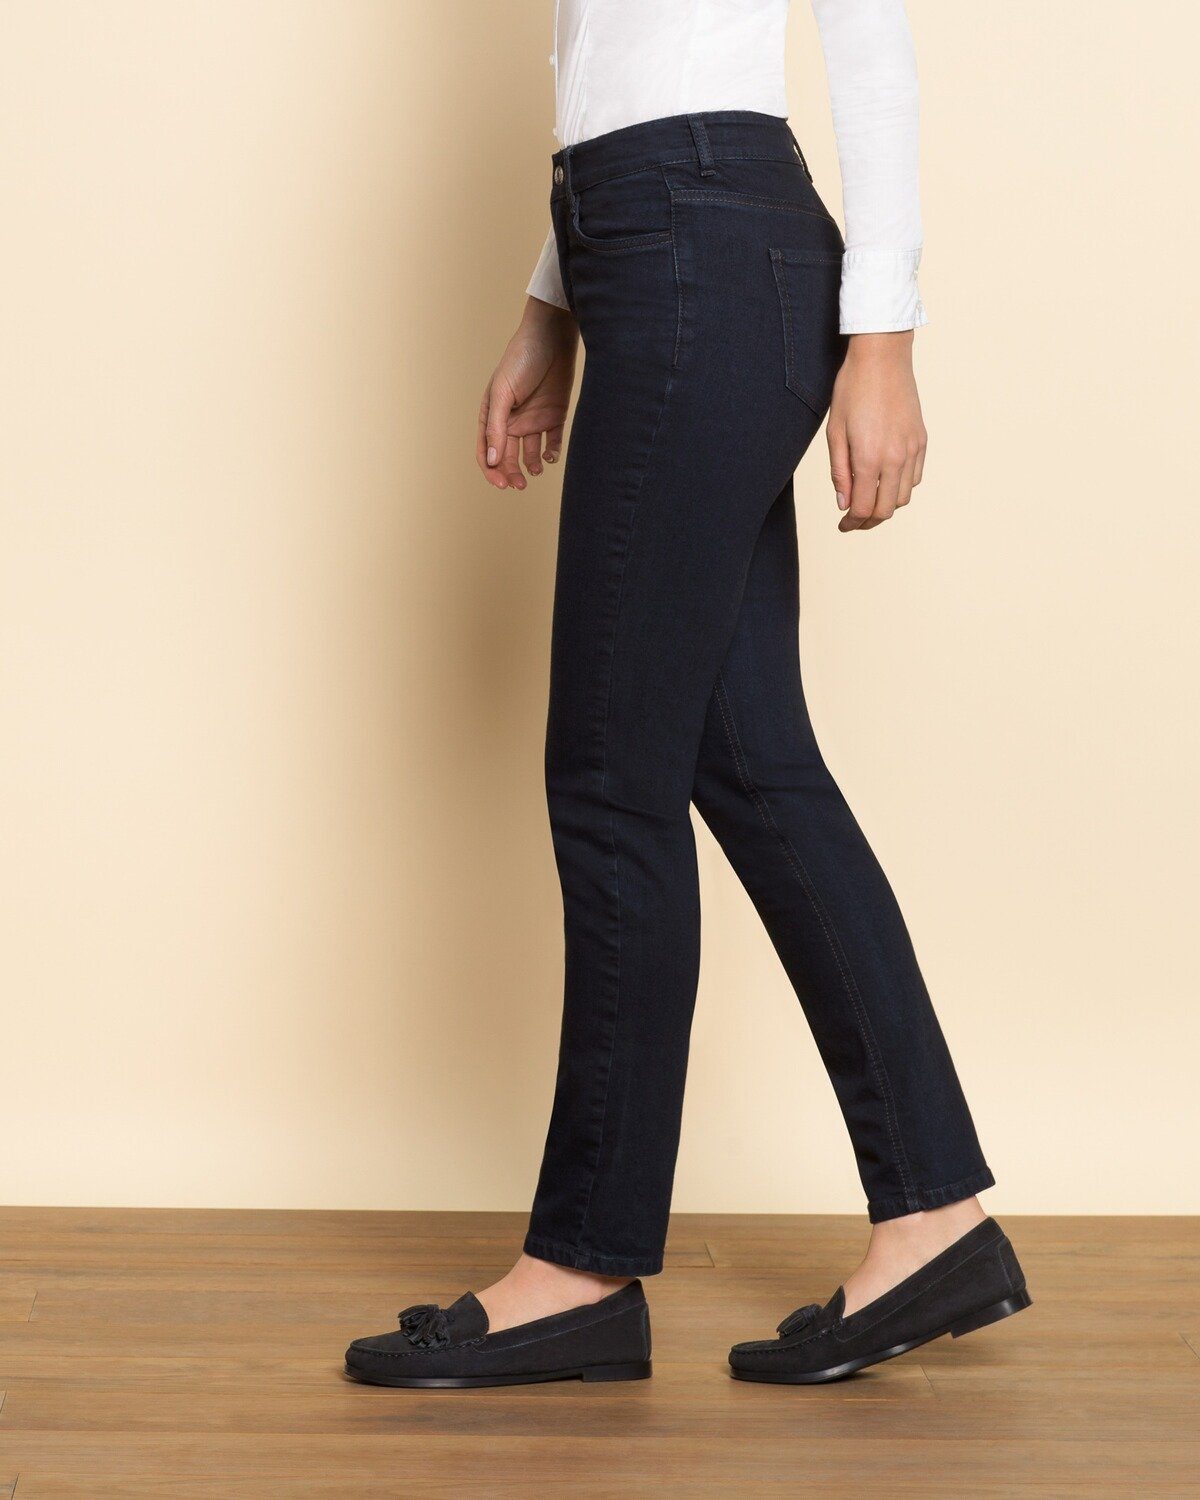 Pipe Angela Rinsewash/L30 Jeans MAC 5-Pocket-Jeans